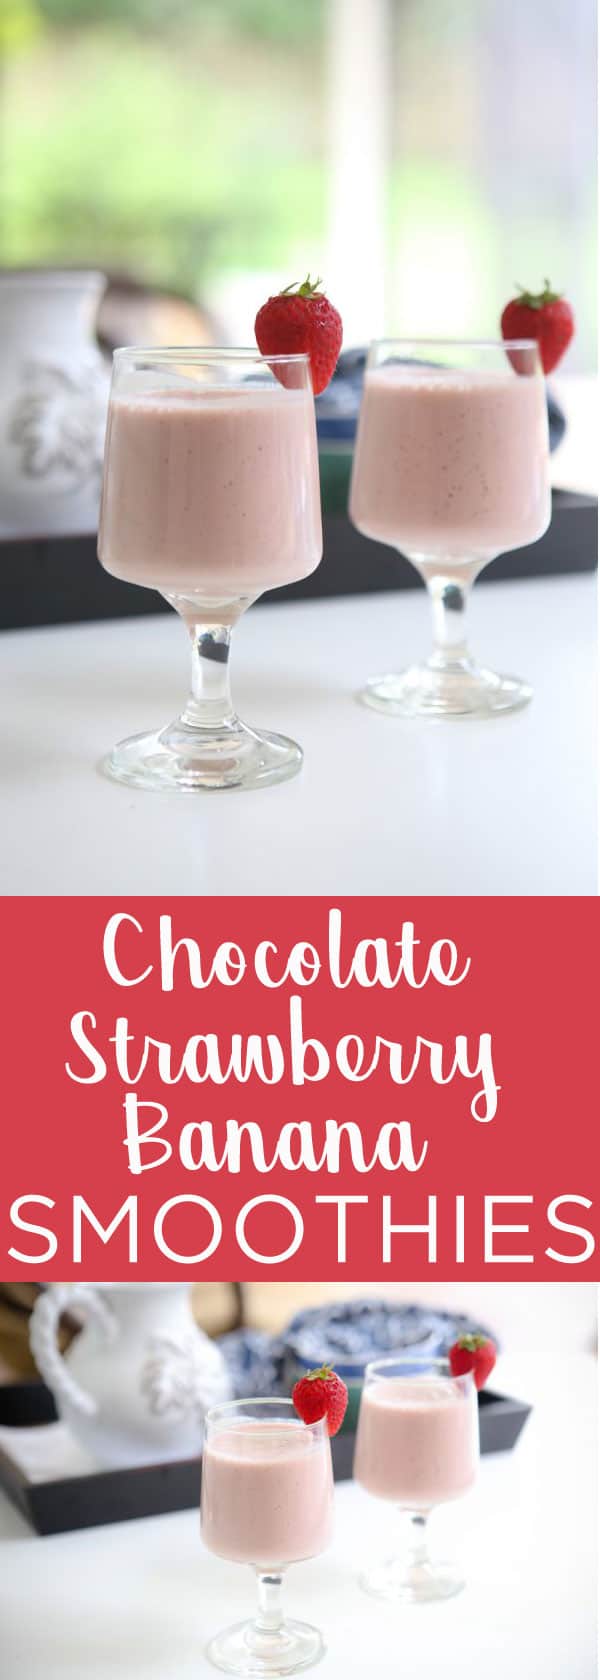 Chocolate Strawberry Banana Smoothies banner